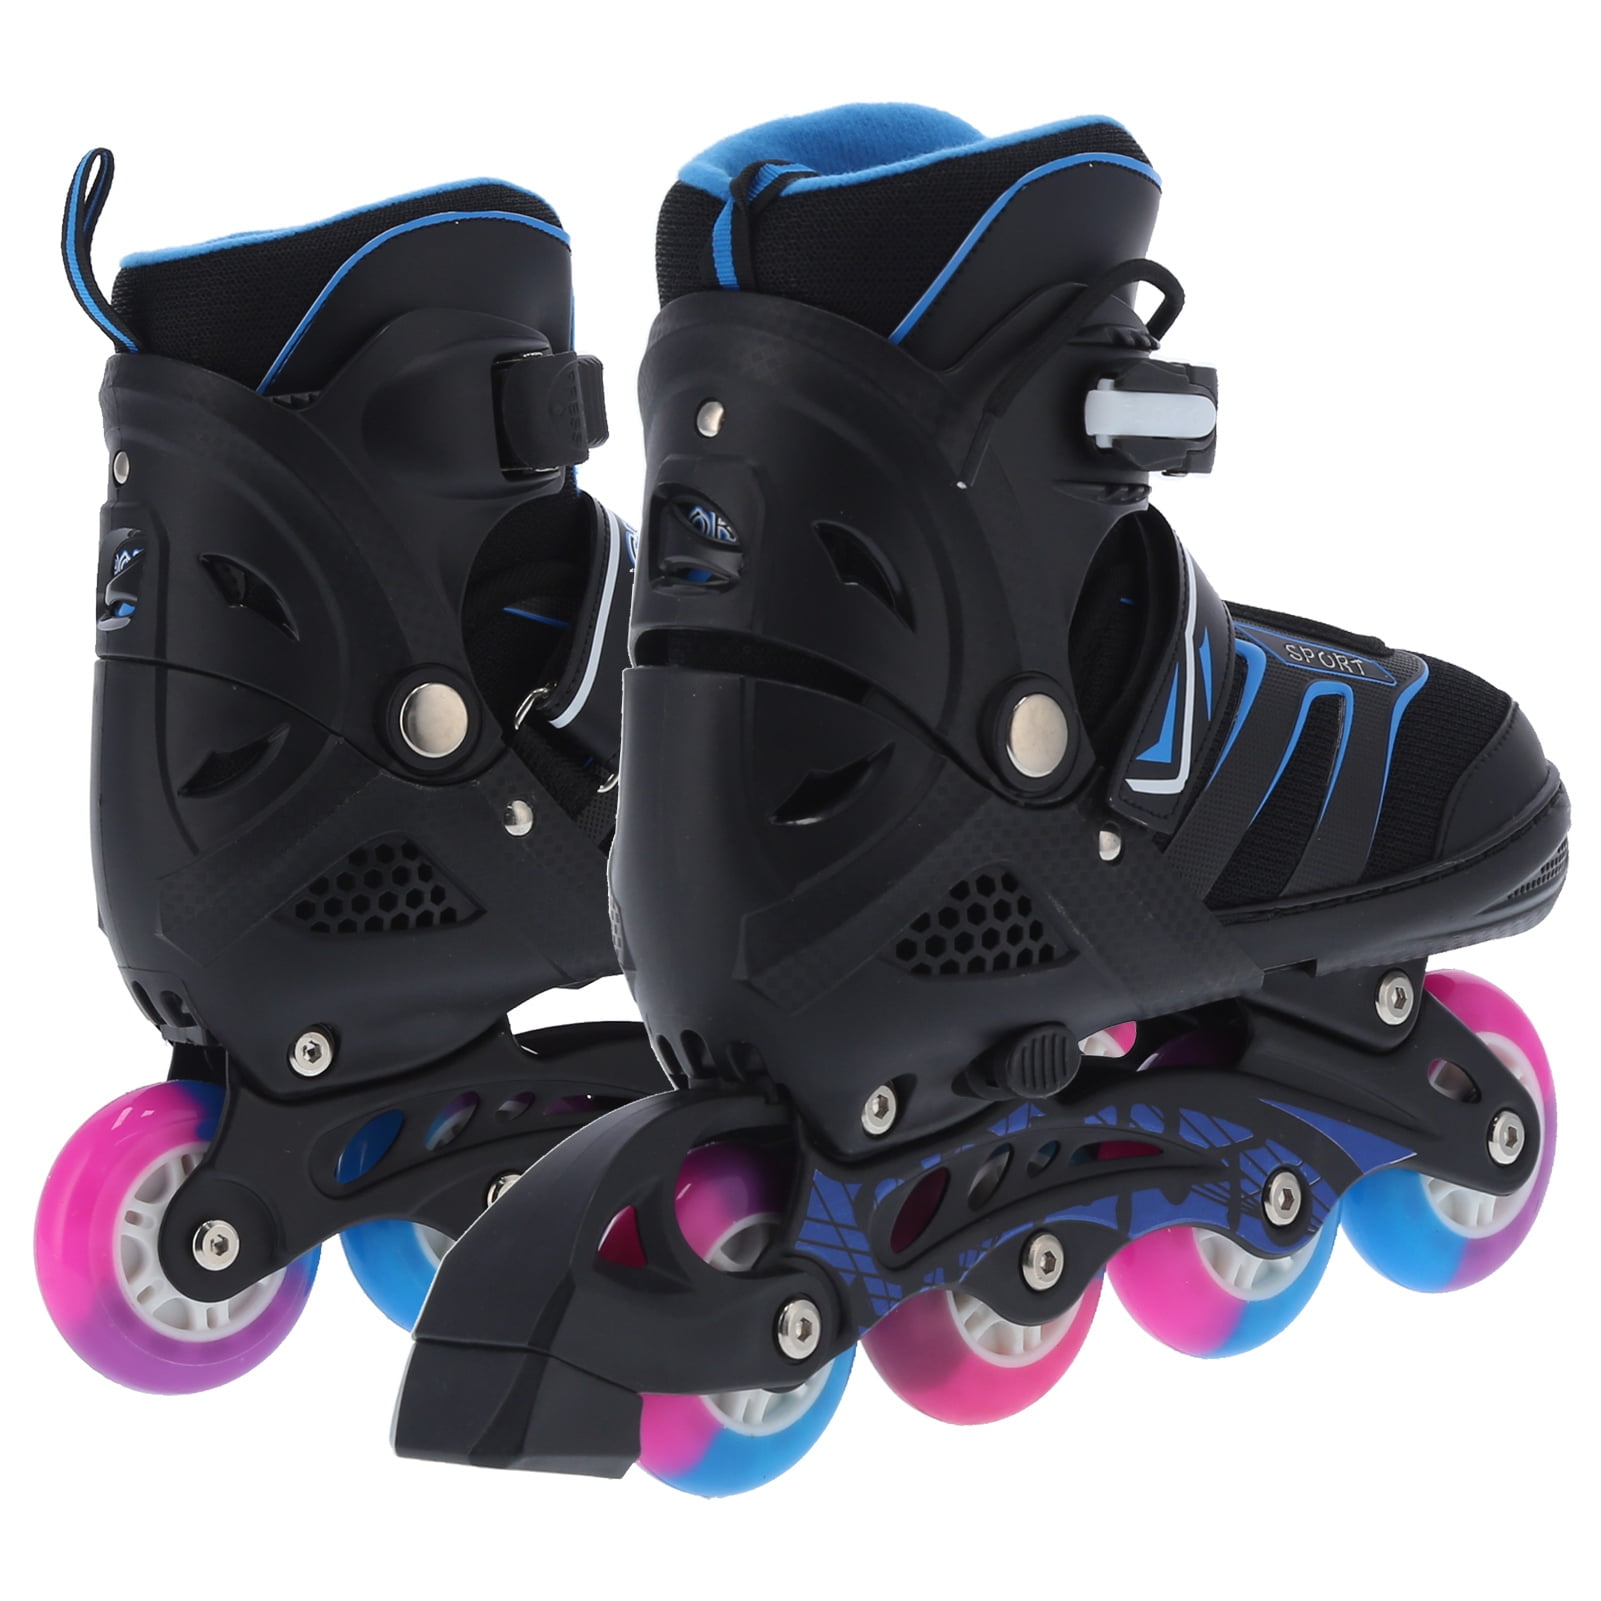 SKT HP Inline Skate Wheels Indoor 8 Pack 70mm 85A Roller Blades Replacement Wheels for Outdoor Hockey Skating Skate 